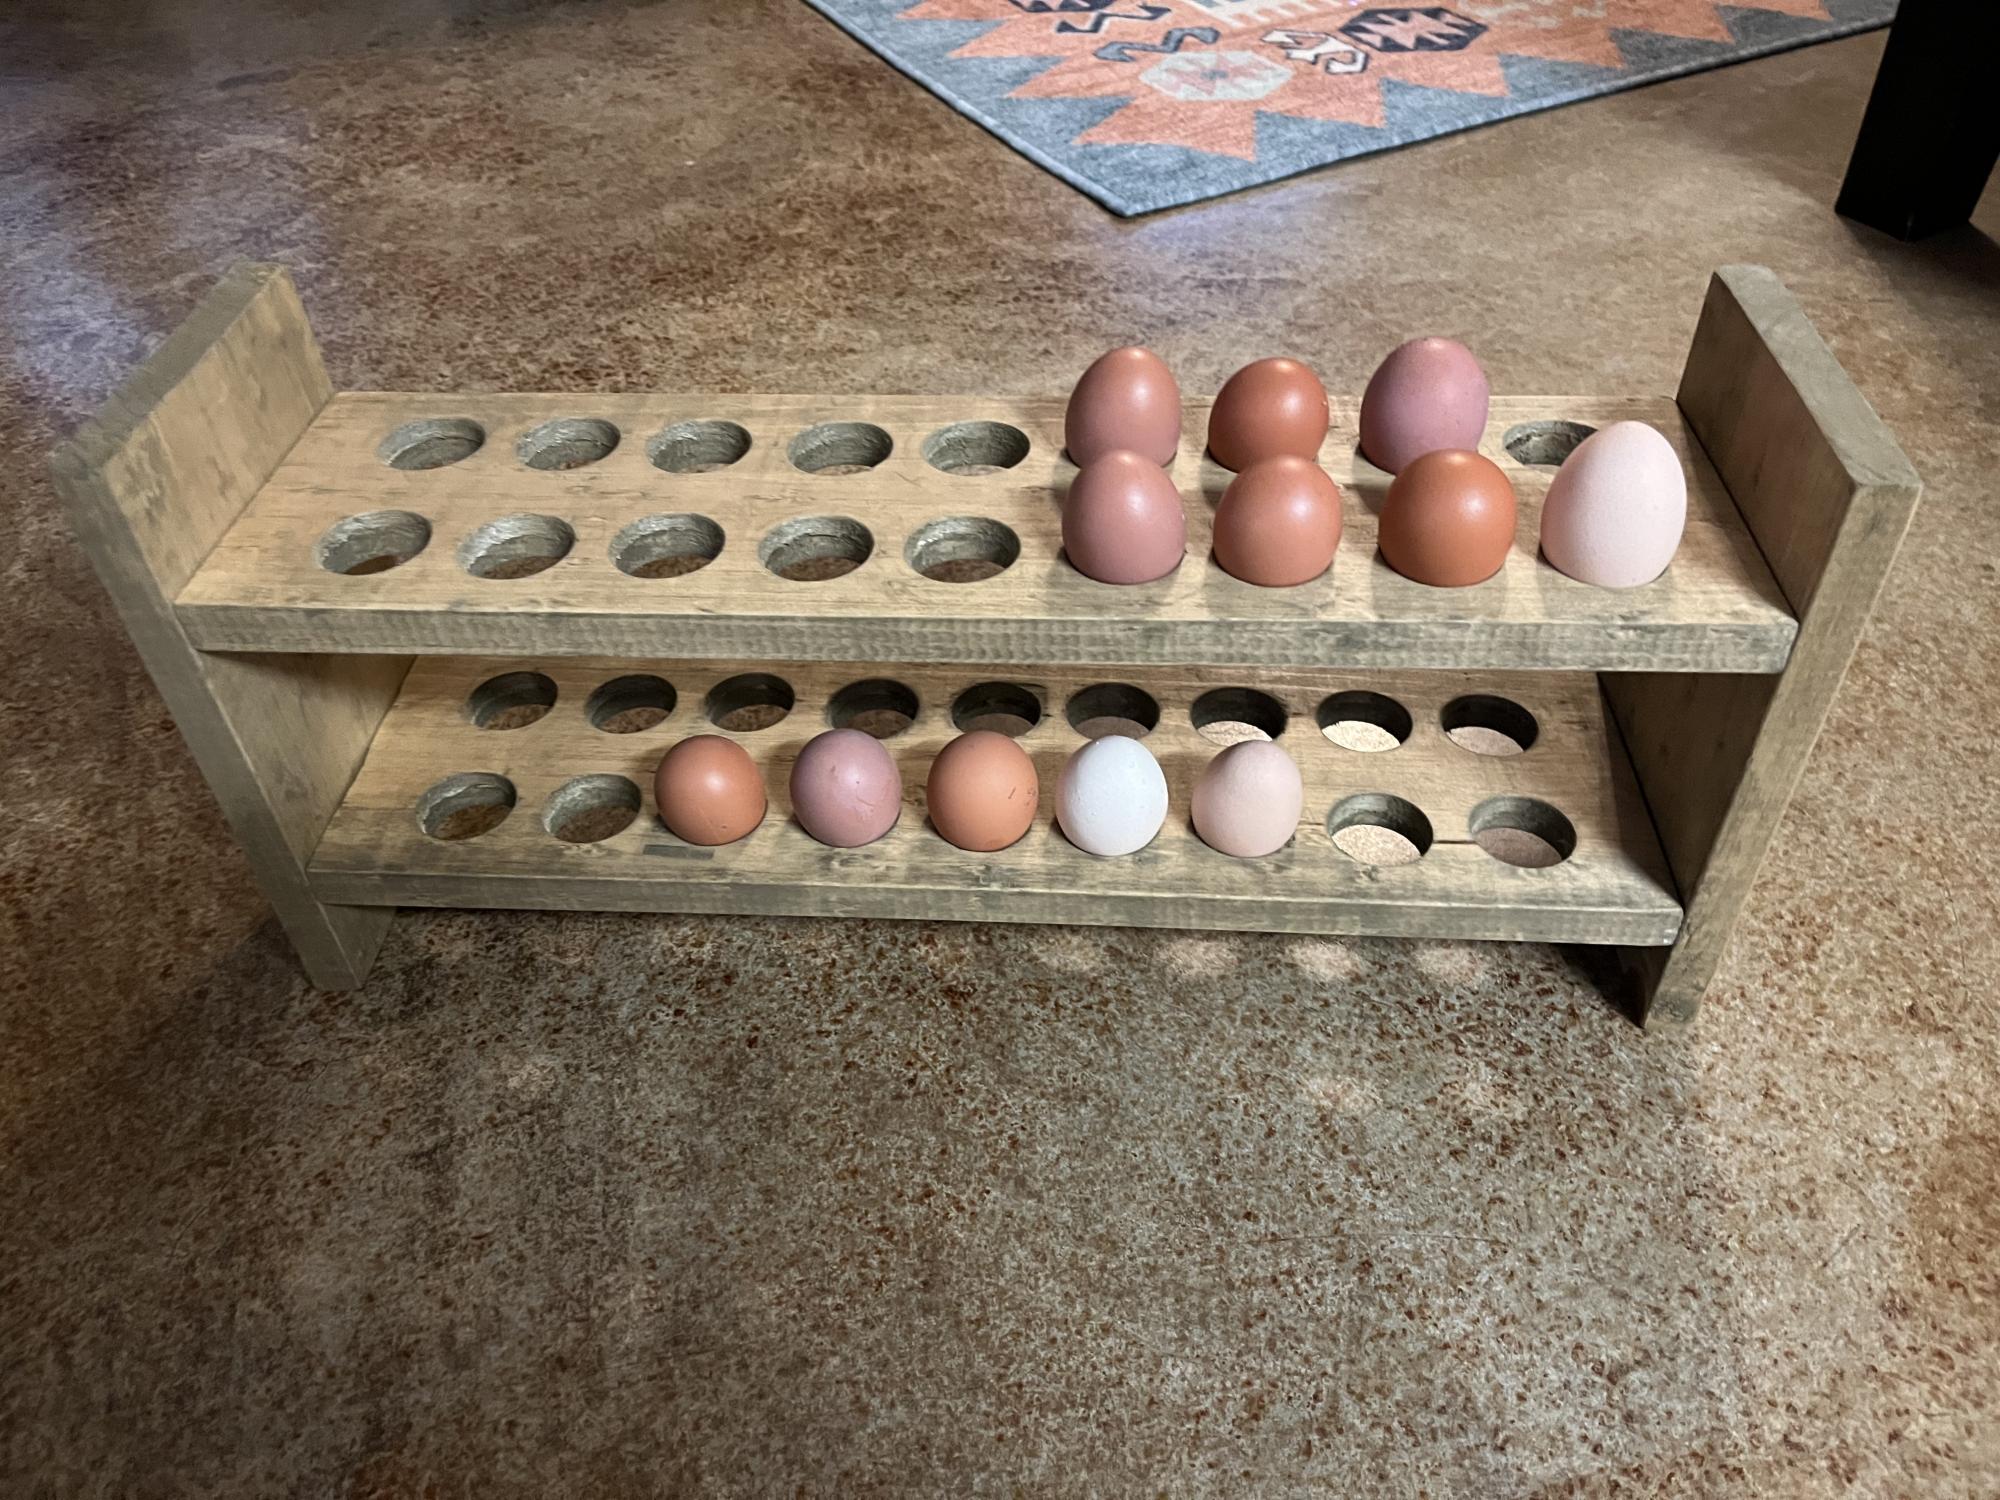 Countertop Wood Egg Holder #anawhite #woodworkingprojects #backyardchickens  